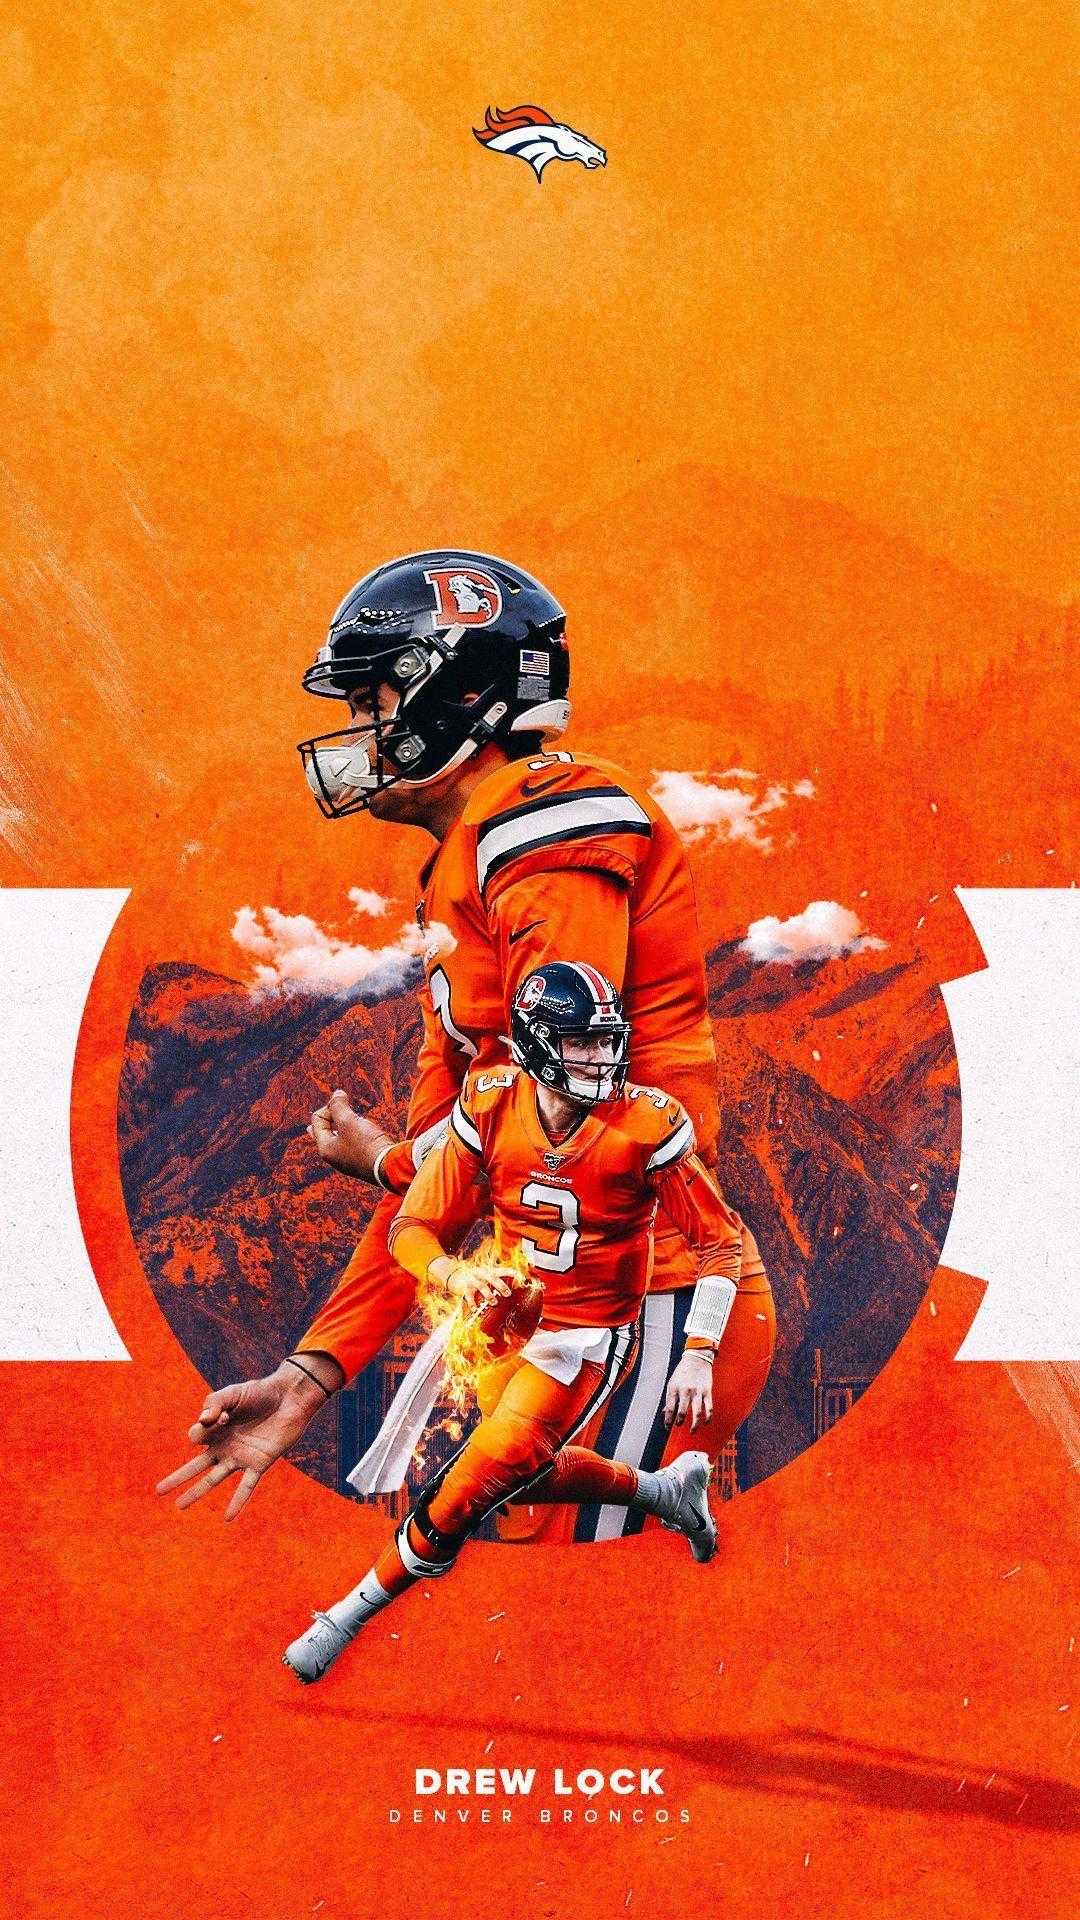 Denver Broncos 2022 Wallpaper Schedule